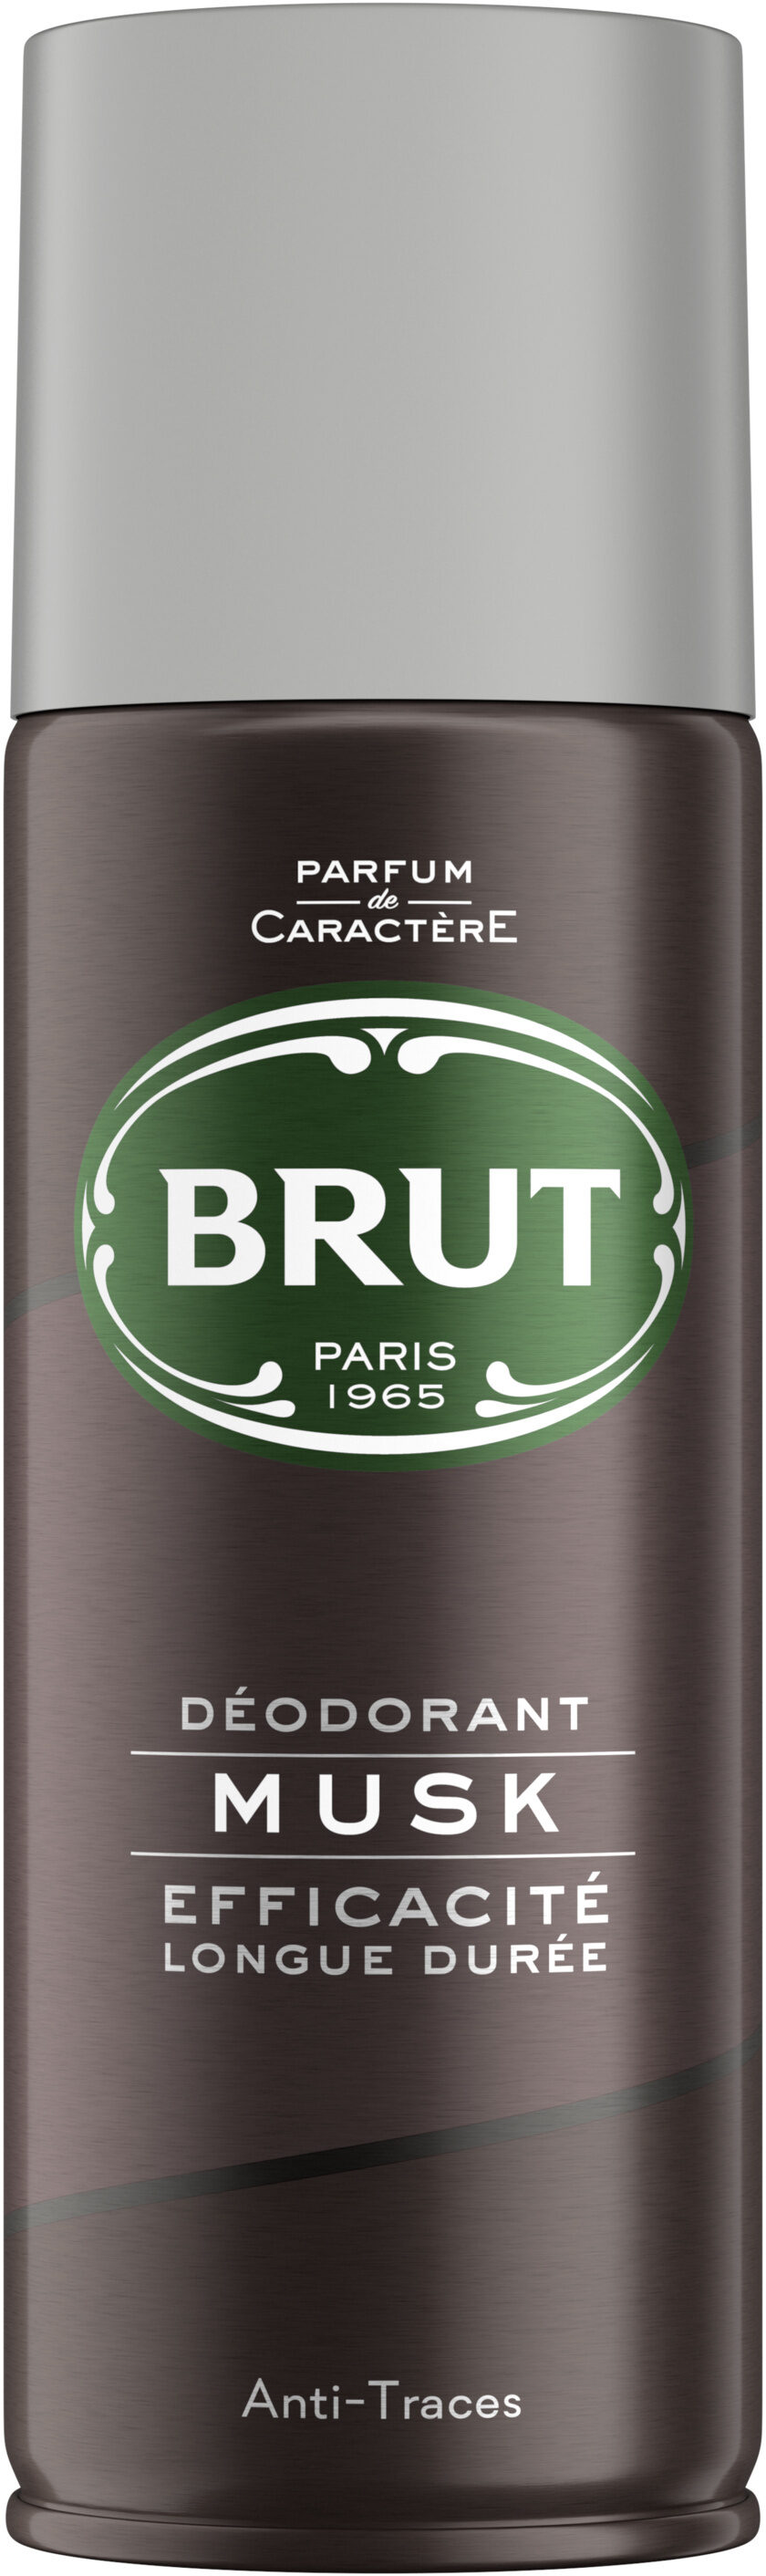 Brut Déodorant Homme Spray Musk 200ml - Produit - fr